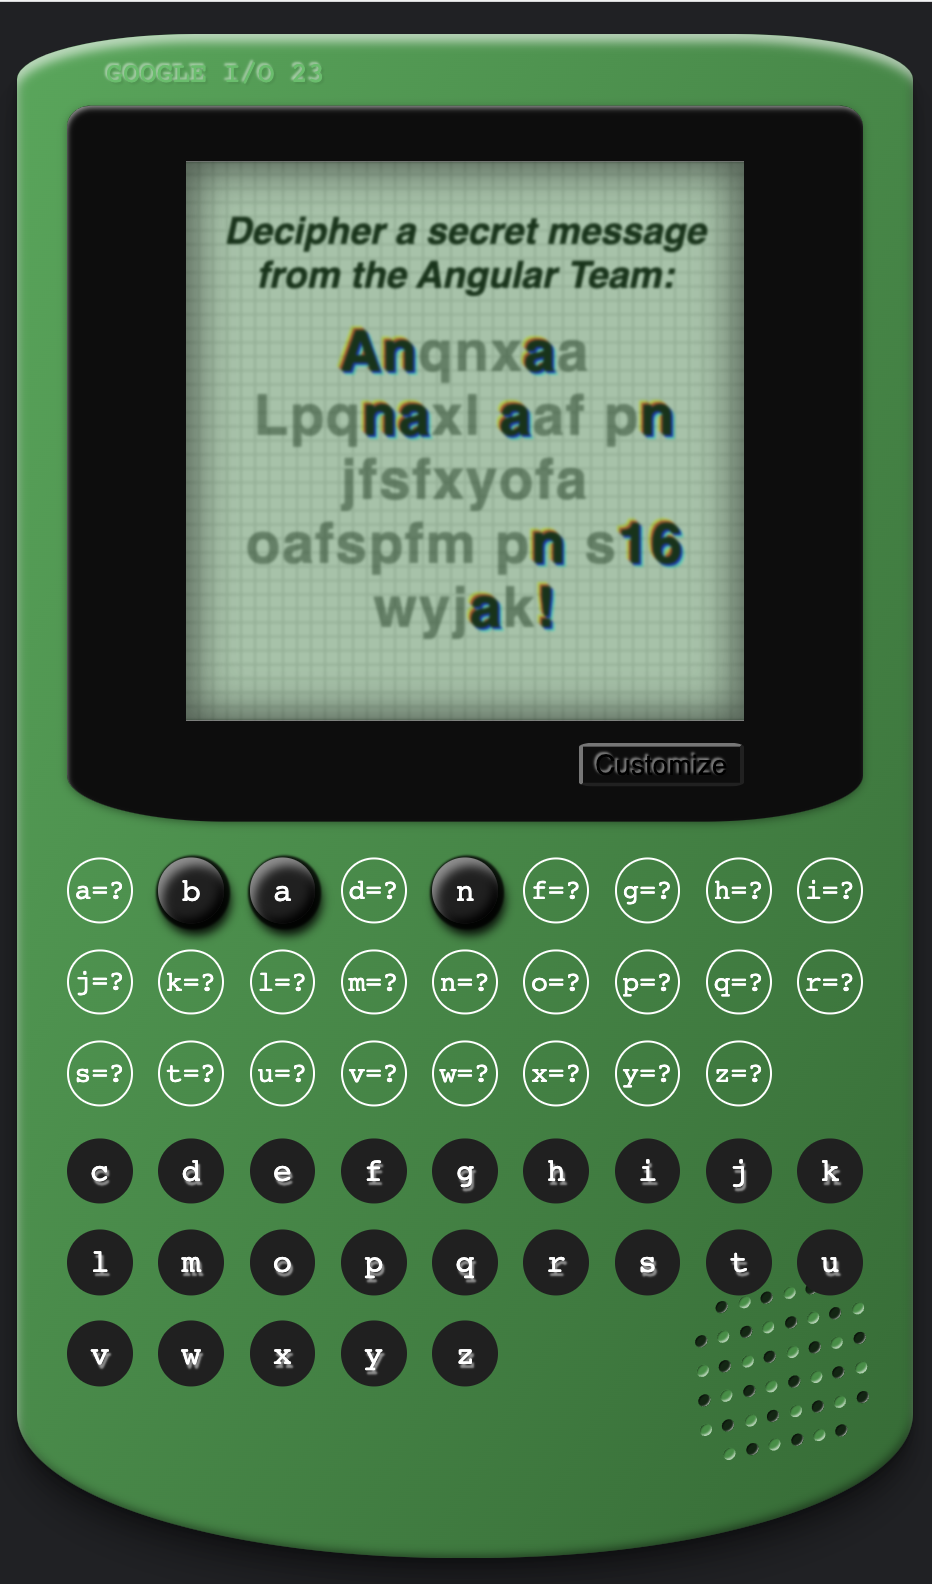 「Anqnxaa Lpcnaxl aaf pn jfafxyofa aofapfm pn a16 wyjak」の画面にメッセージが隠れている、ビンテージ グリーンのゲーム機形式の Angular Cypher ゲームです。